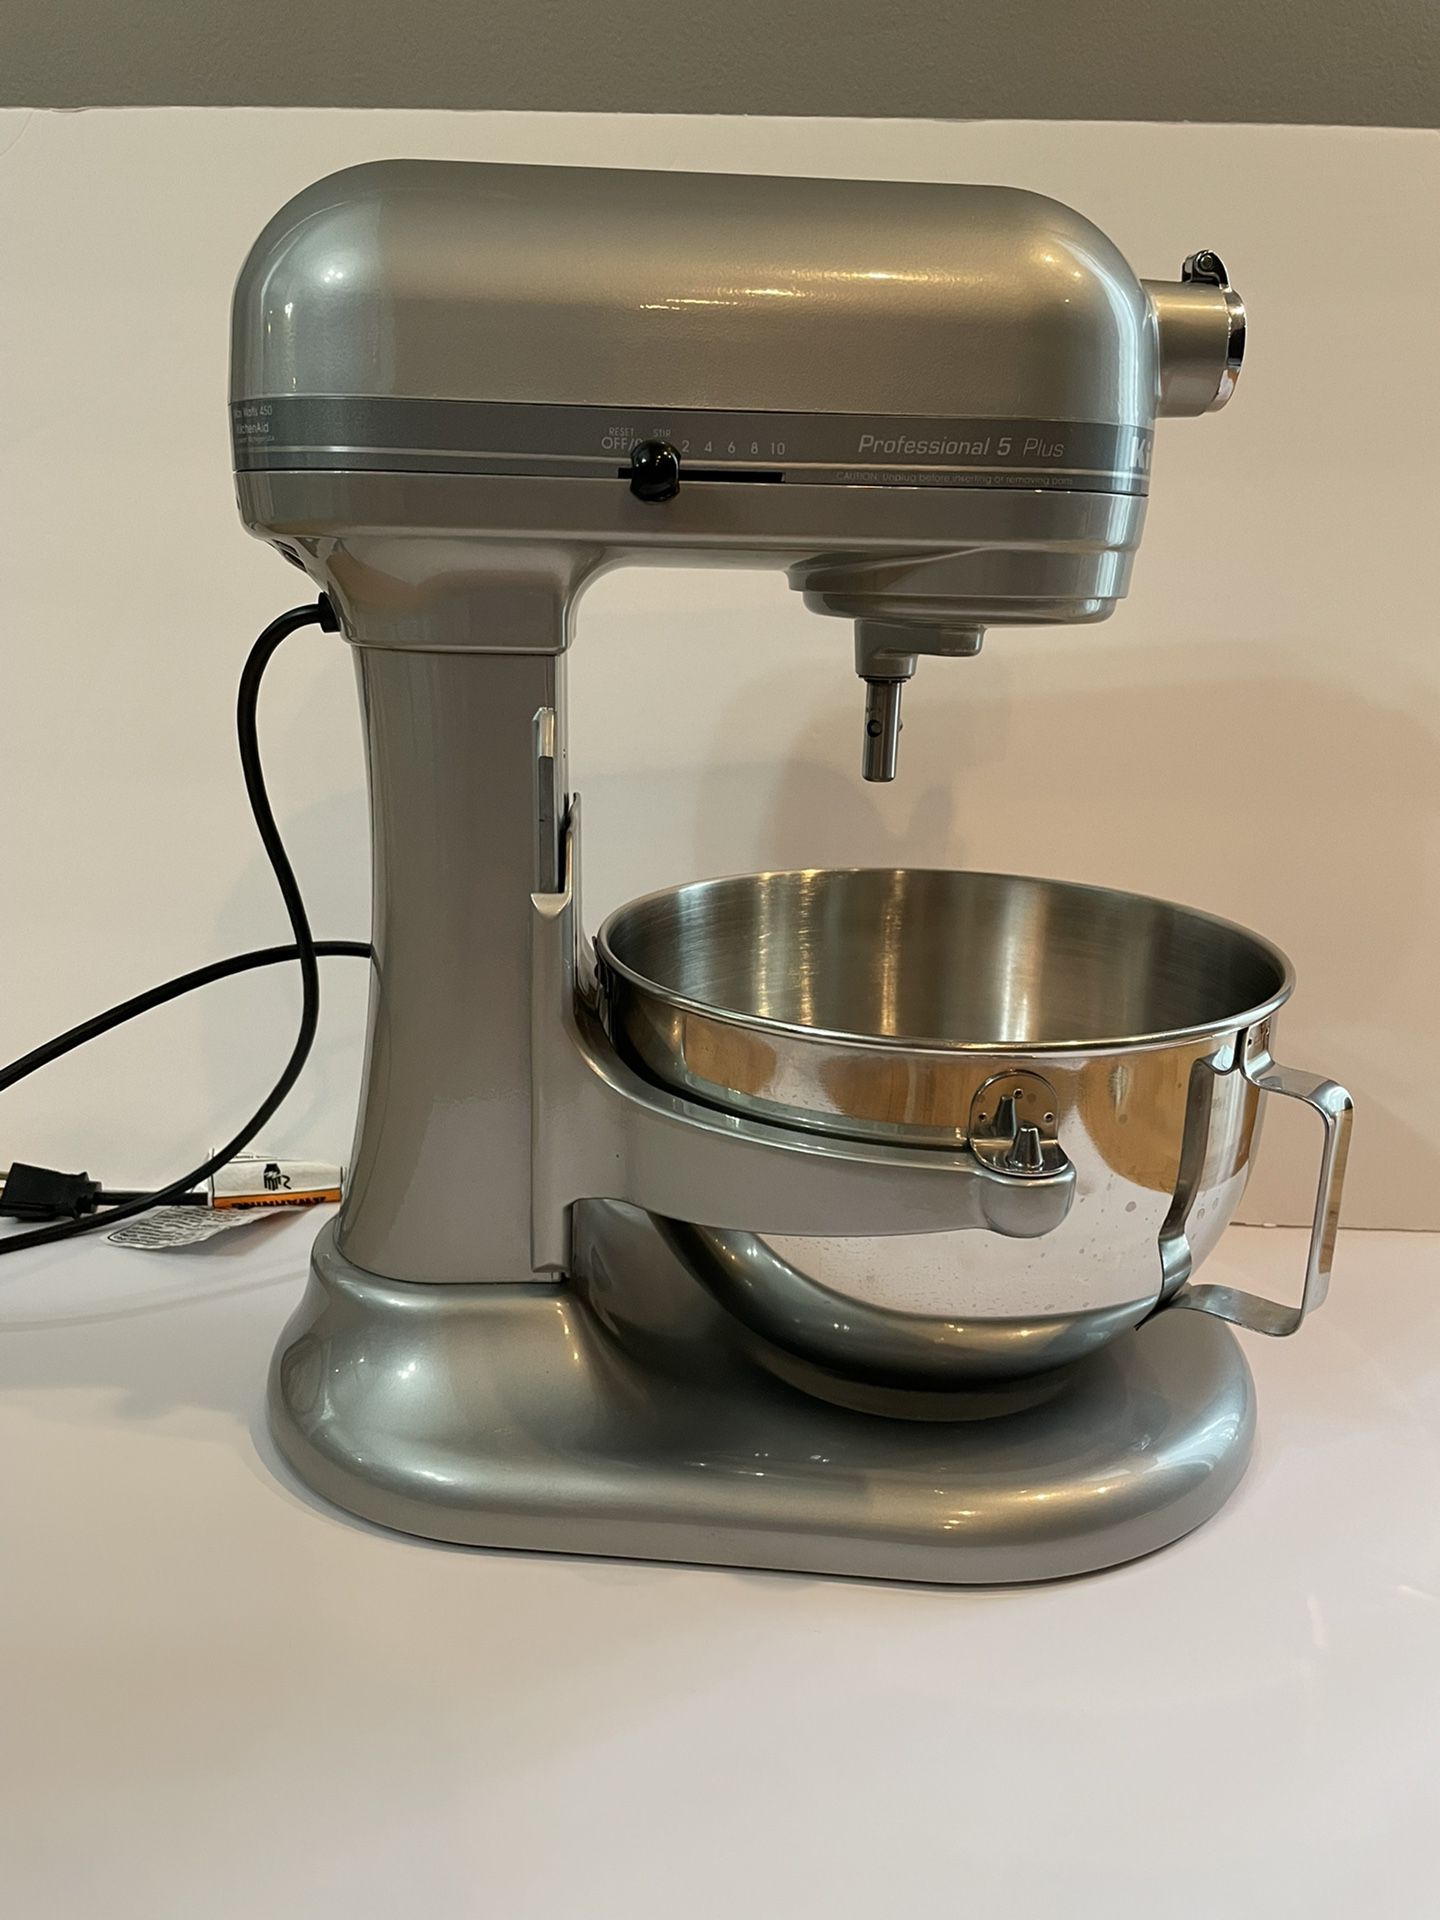 KitchenAid - Professional 5 Plus Series 5 Quart Bowl-Lift Stand Mixer -  KV25G0XSL - Silver for Sale in Austin, TX - OfferUp